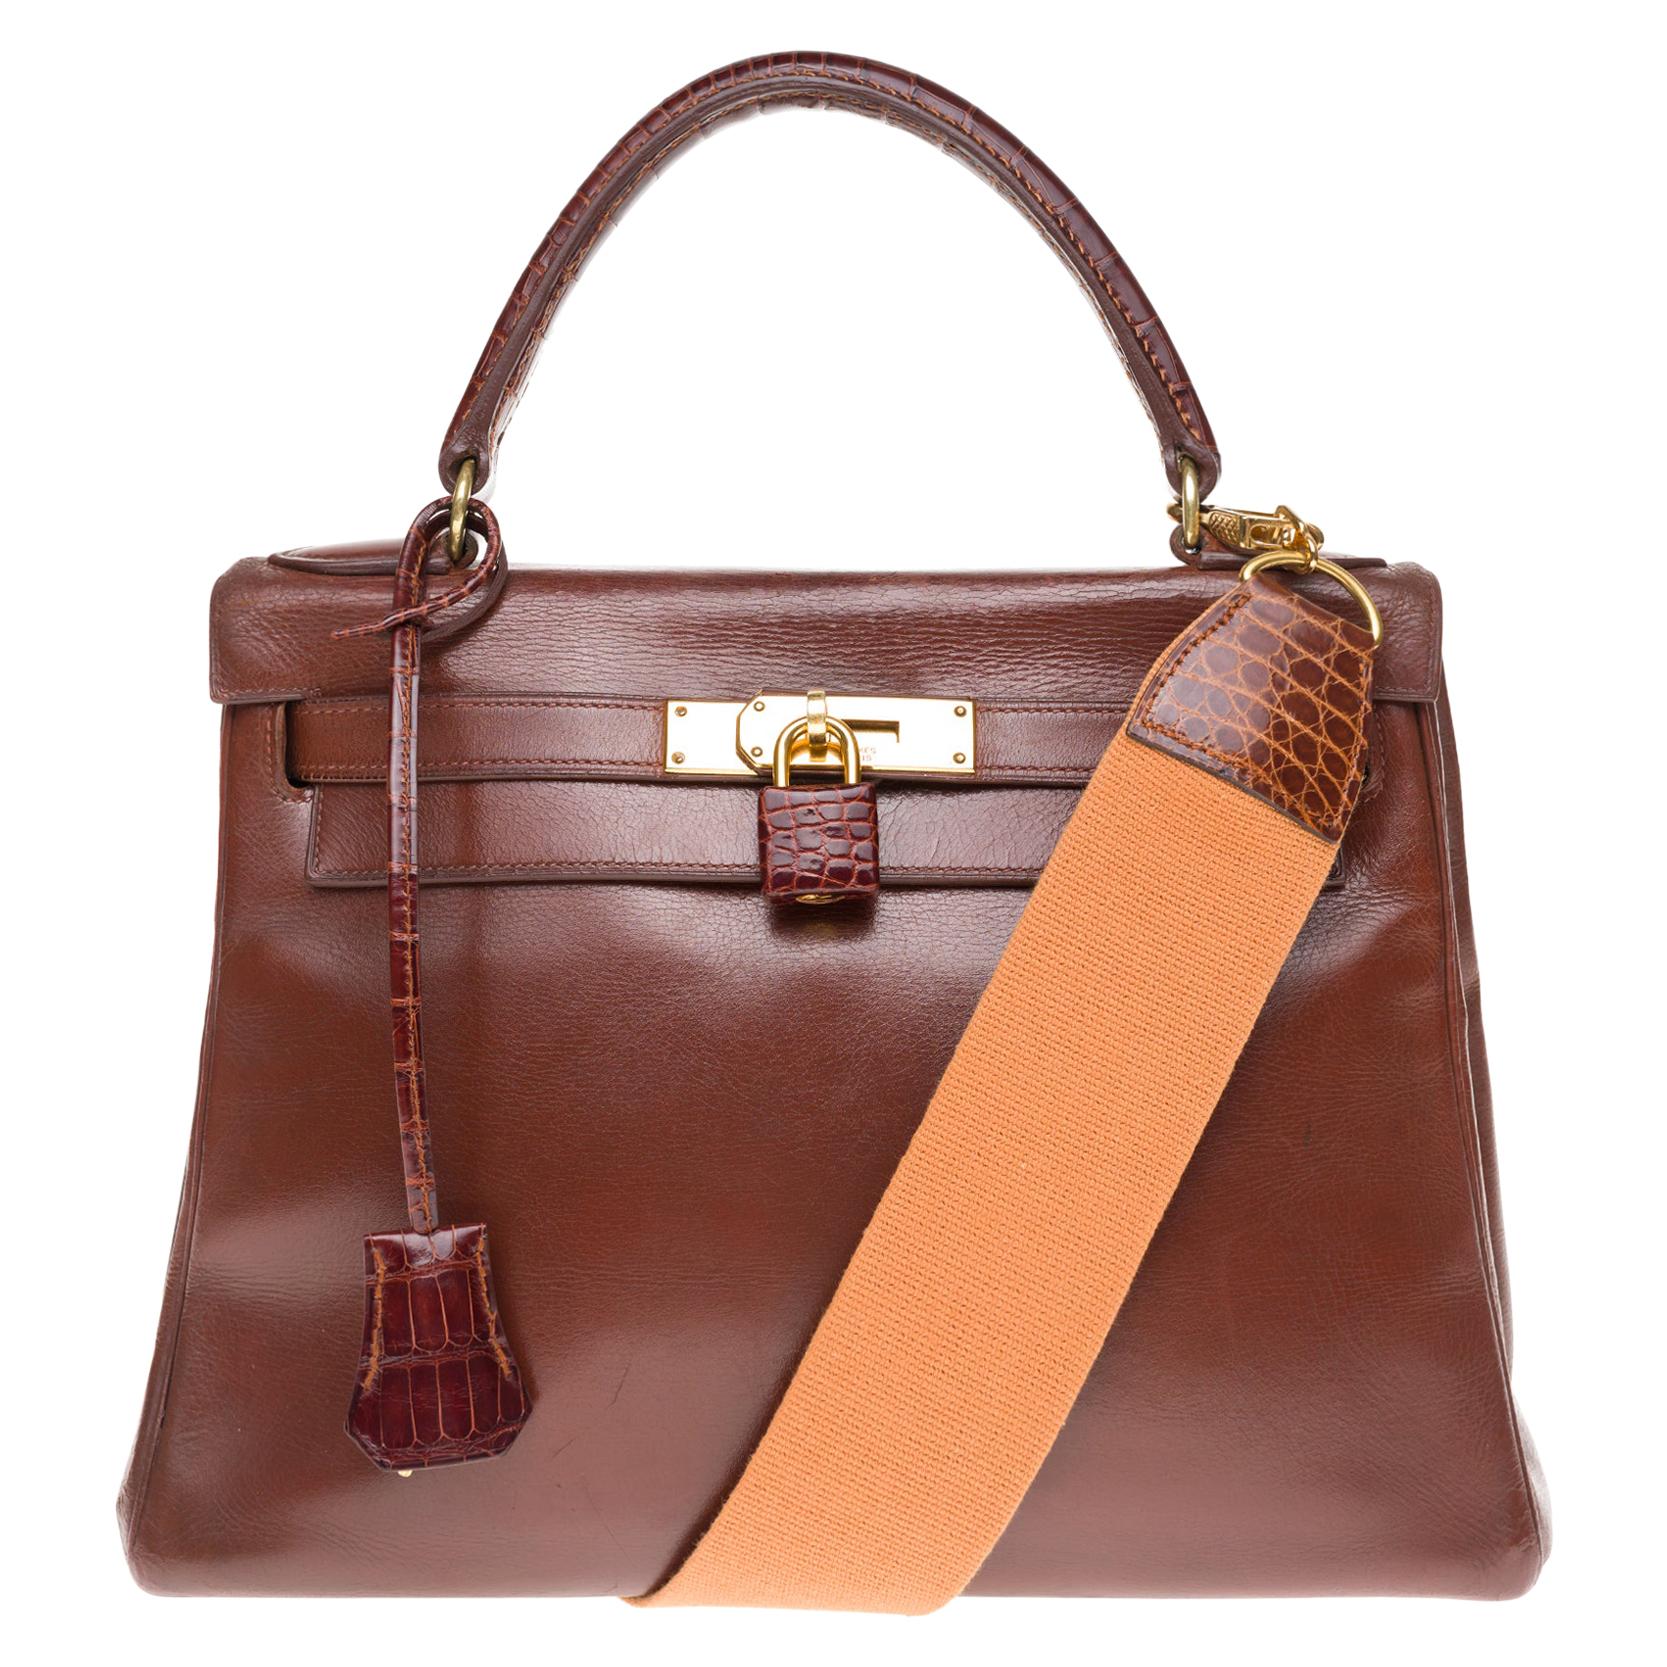 Hermes Kelly 28cm strap handbag  in brown calf customized with brown crocodile